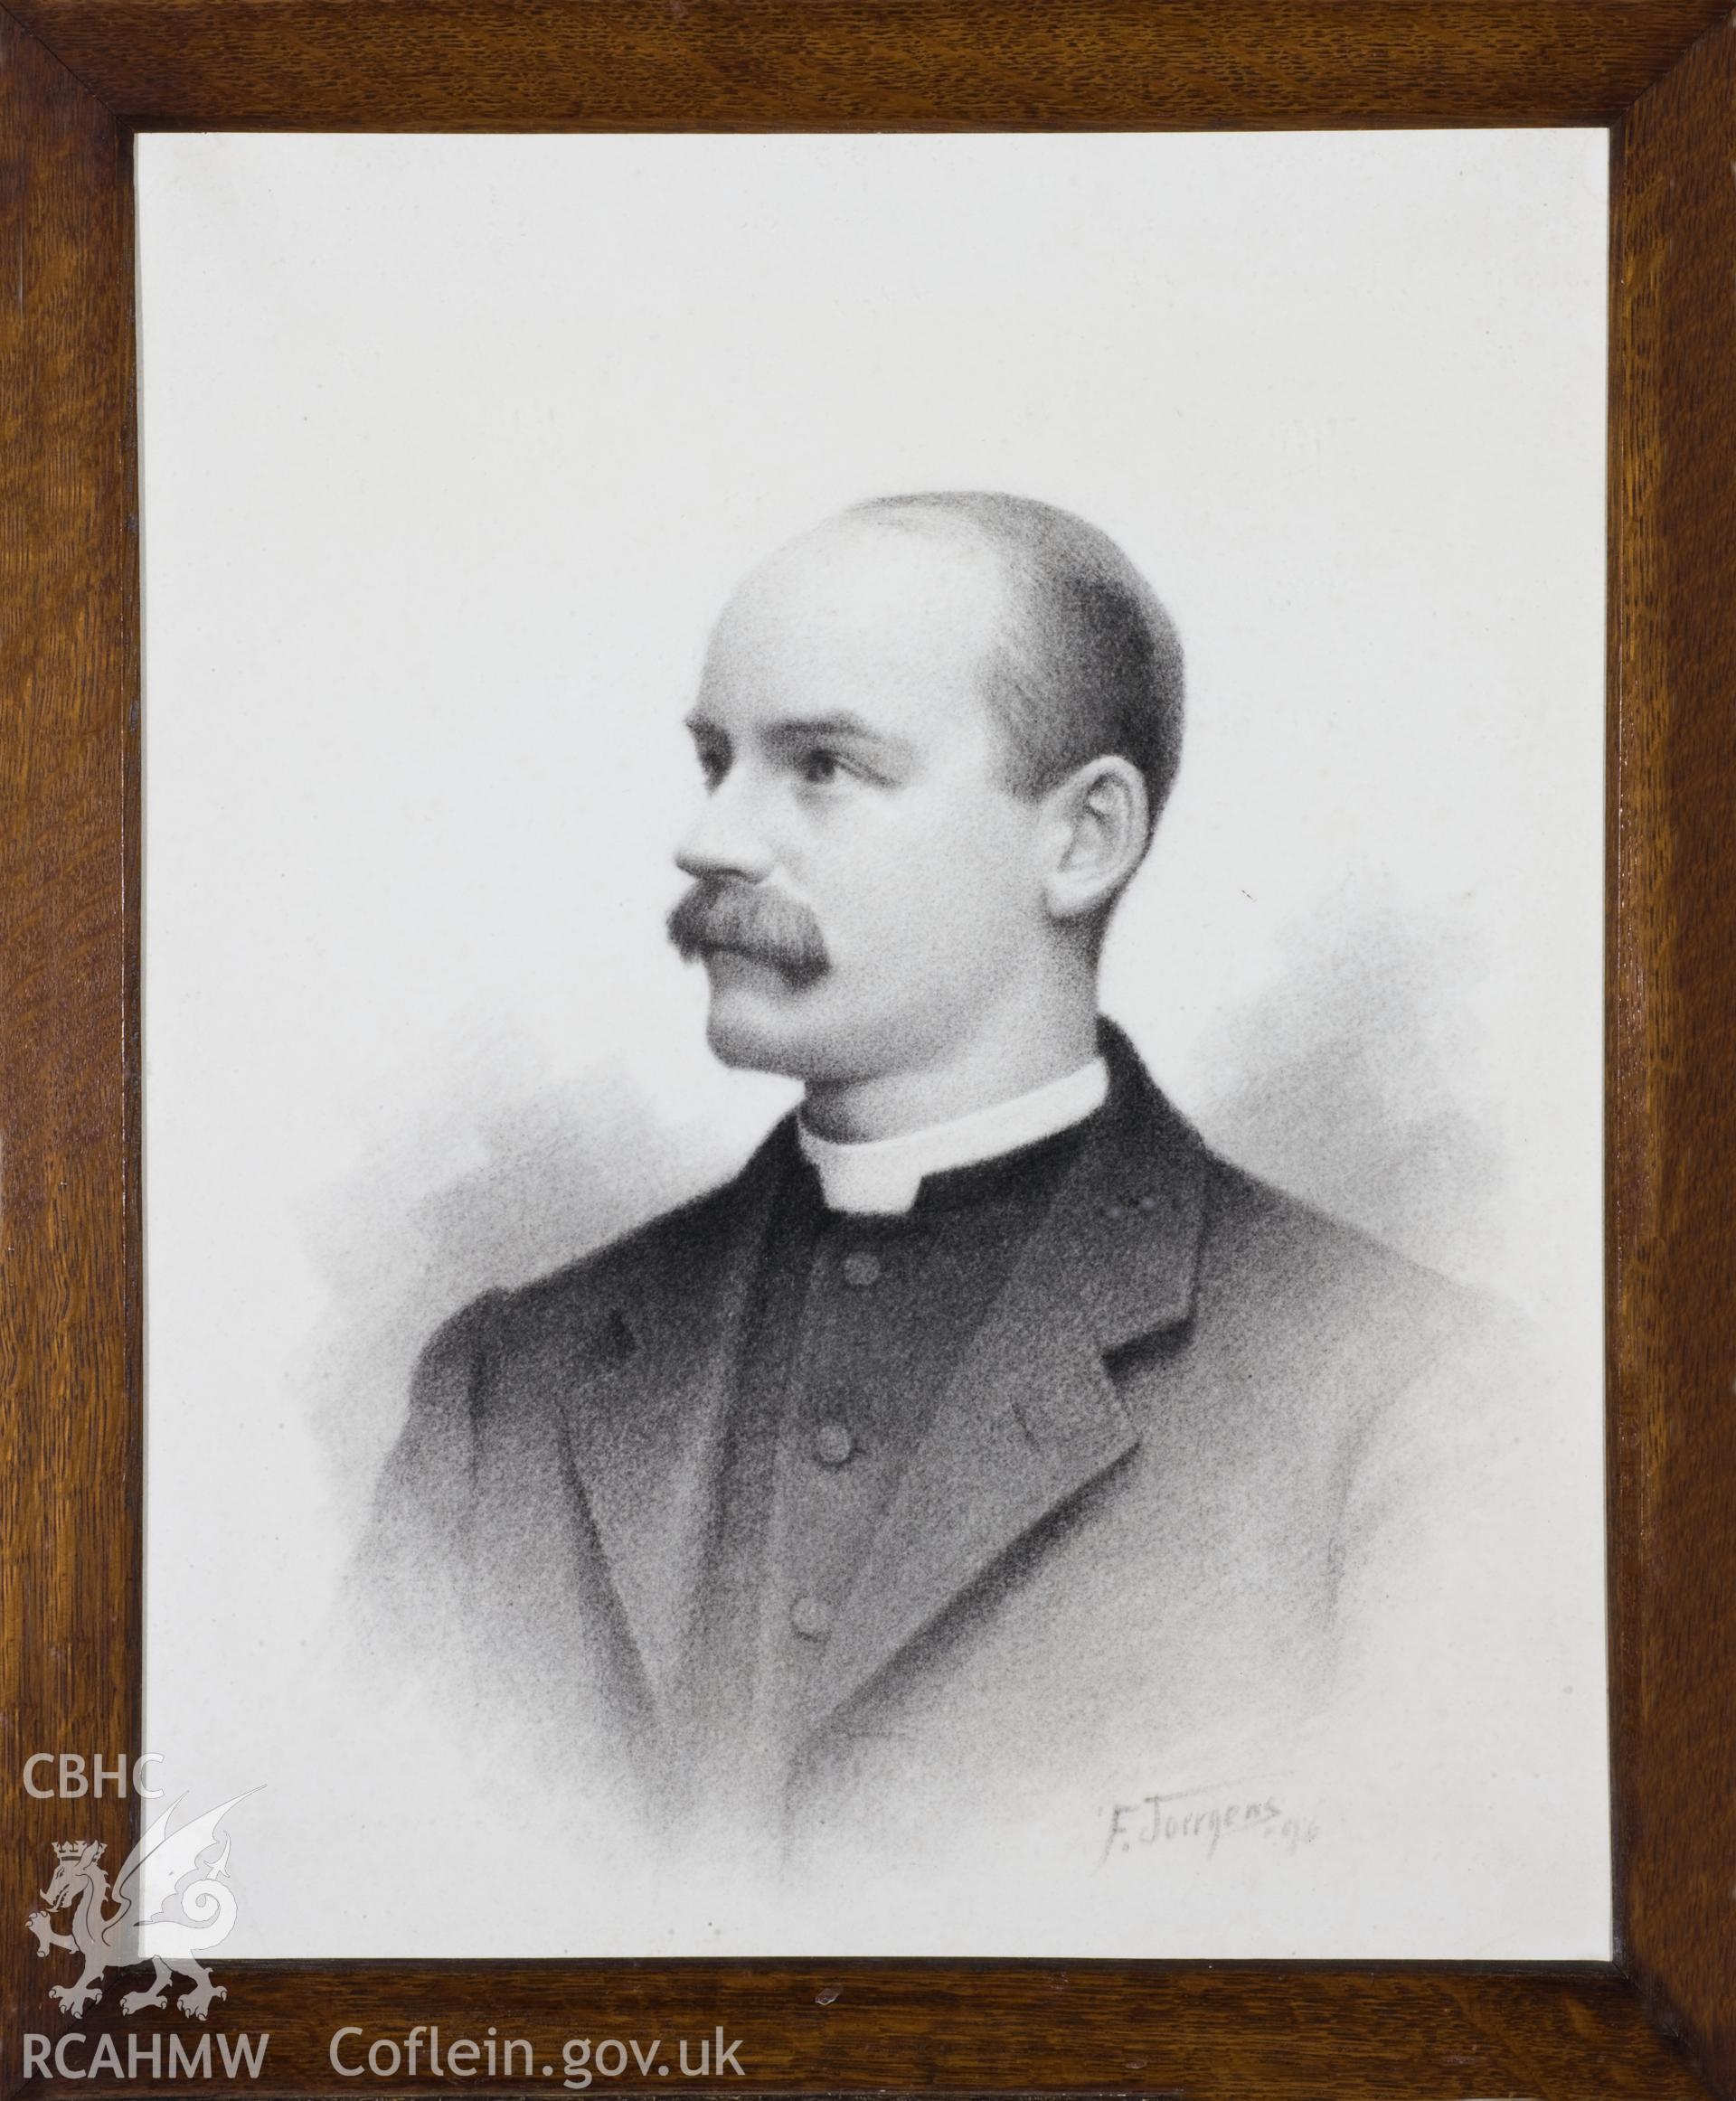 Portrait of minister: F. Jorrgens.